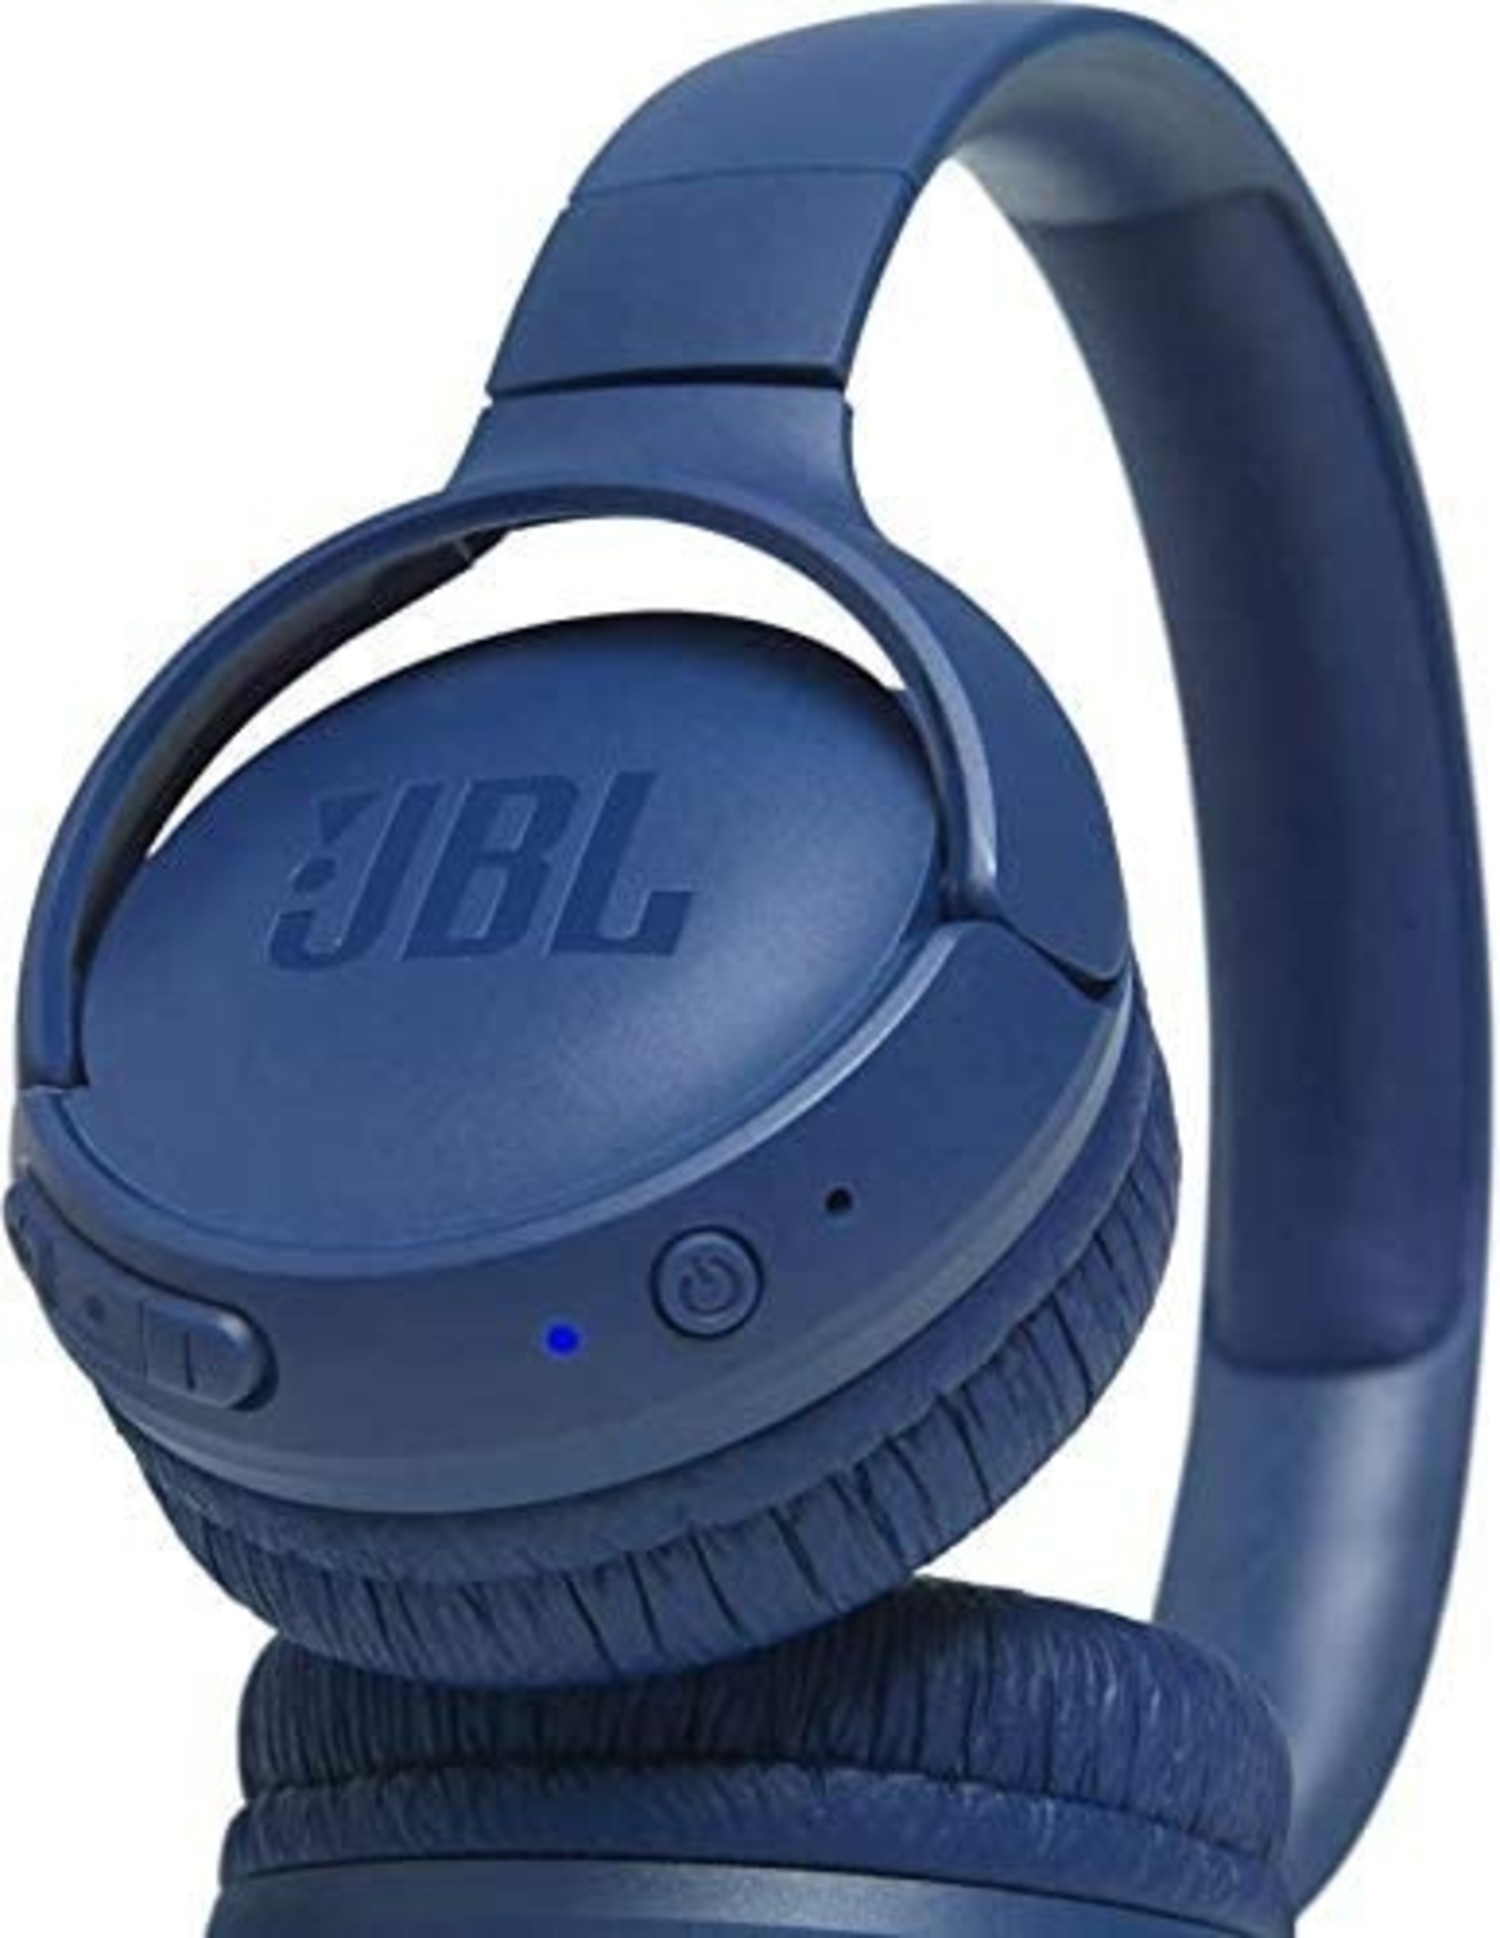 JBL Tune510BT Wireless Bluetooth On Ear Headphone - Black; Up to